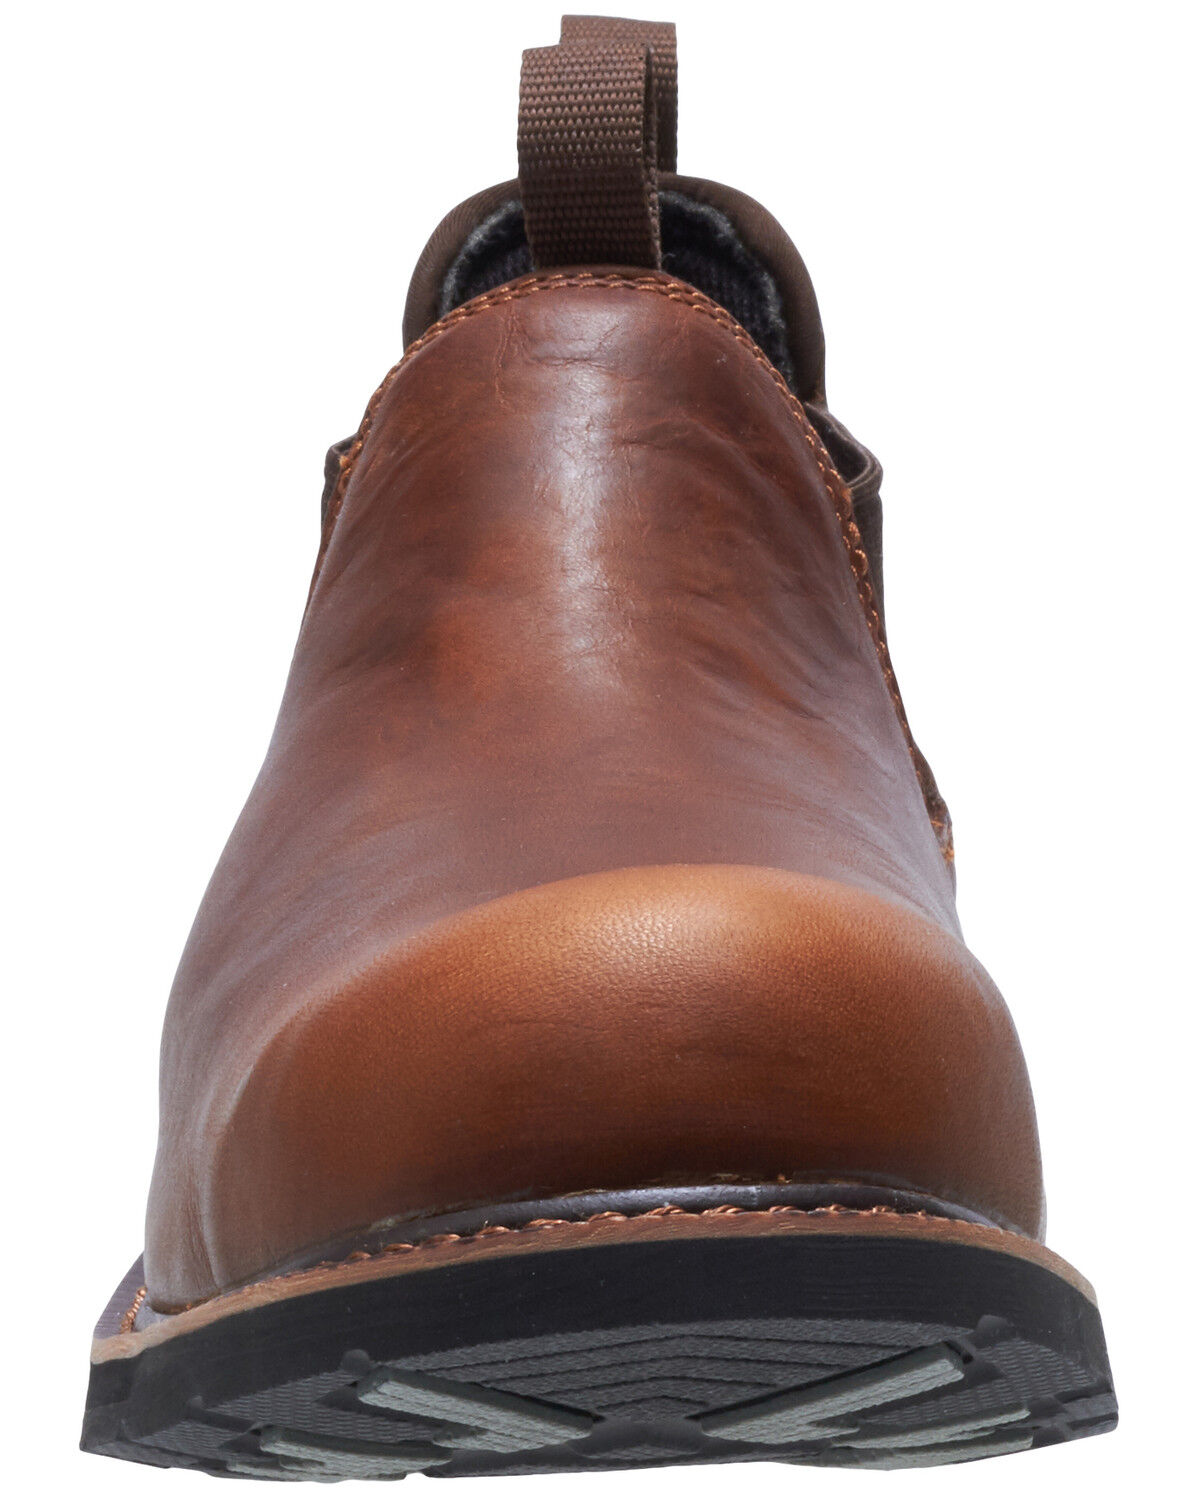 wolverine men's ranchero soft toe wellington boots